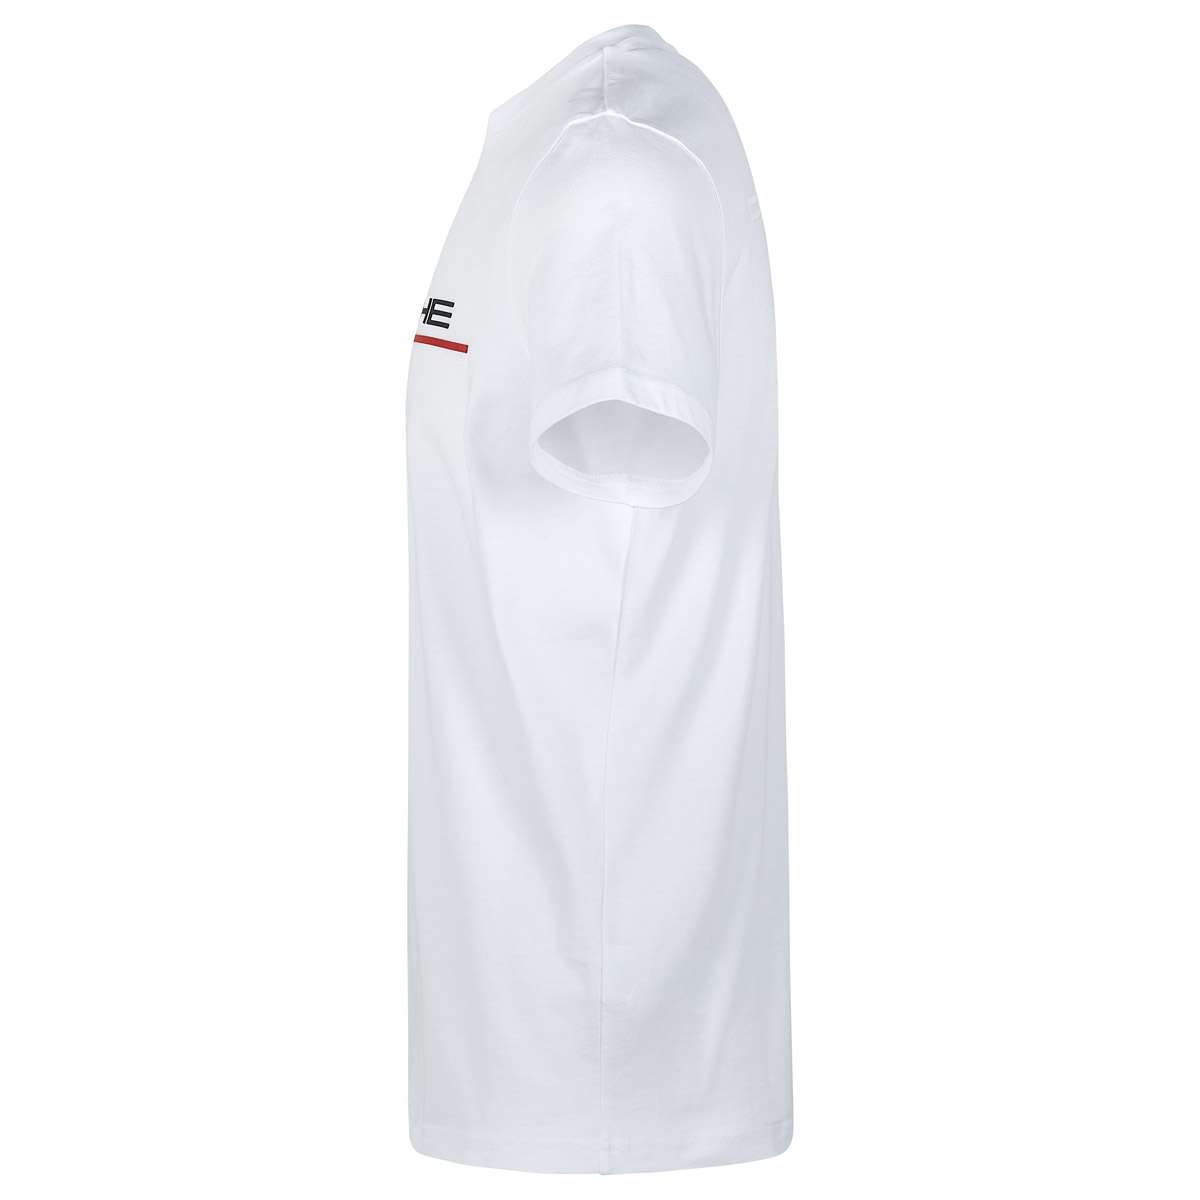 Porsche Motorsport T-Shirt "Logo" - white